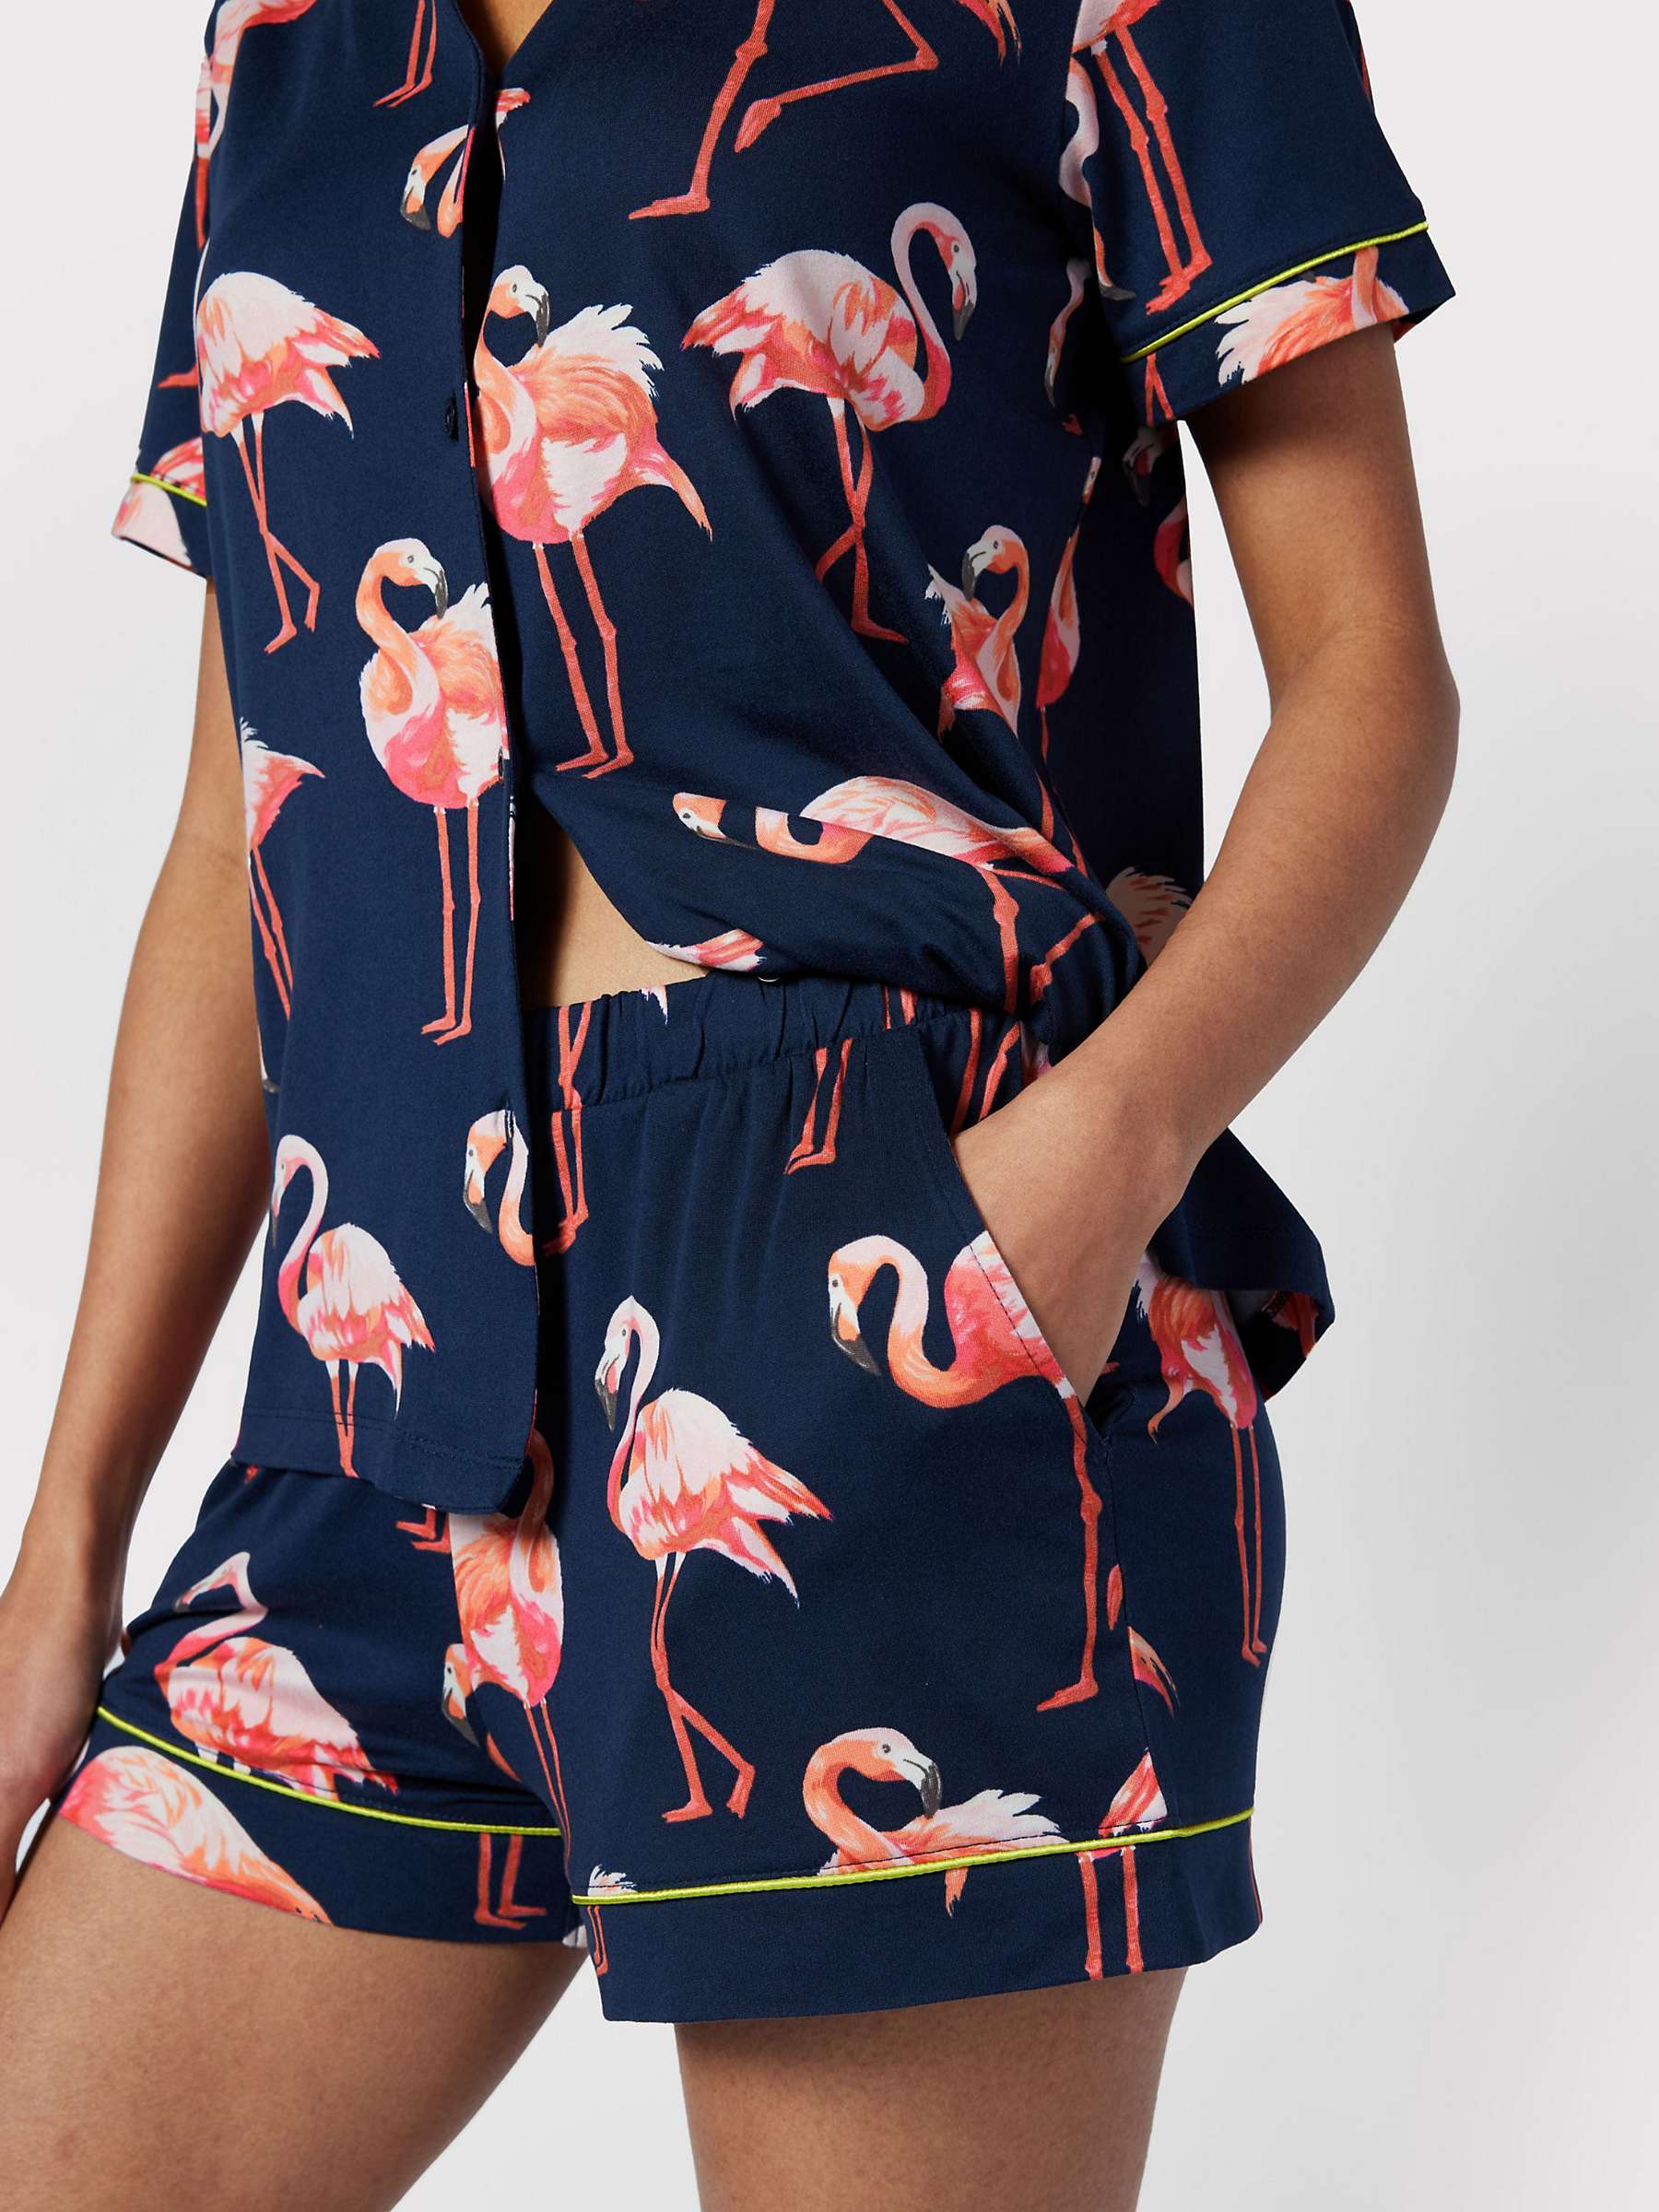 Buy Chelsea Peers Flamingo Print Short Pyjama Set, Navy Online at johnlewis.com